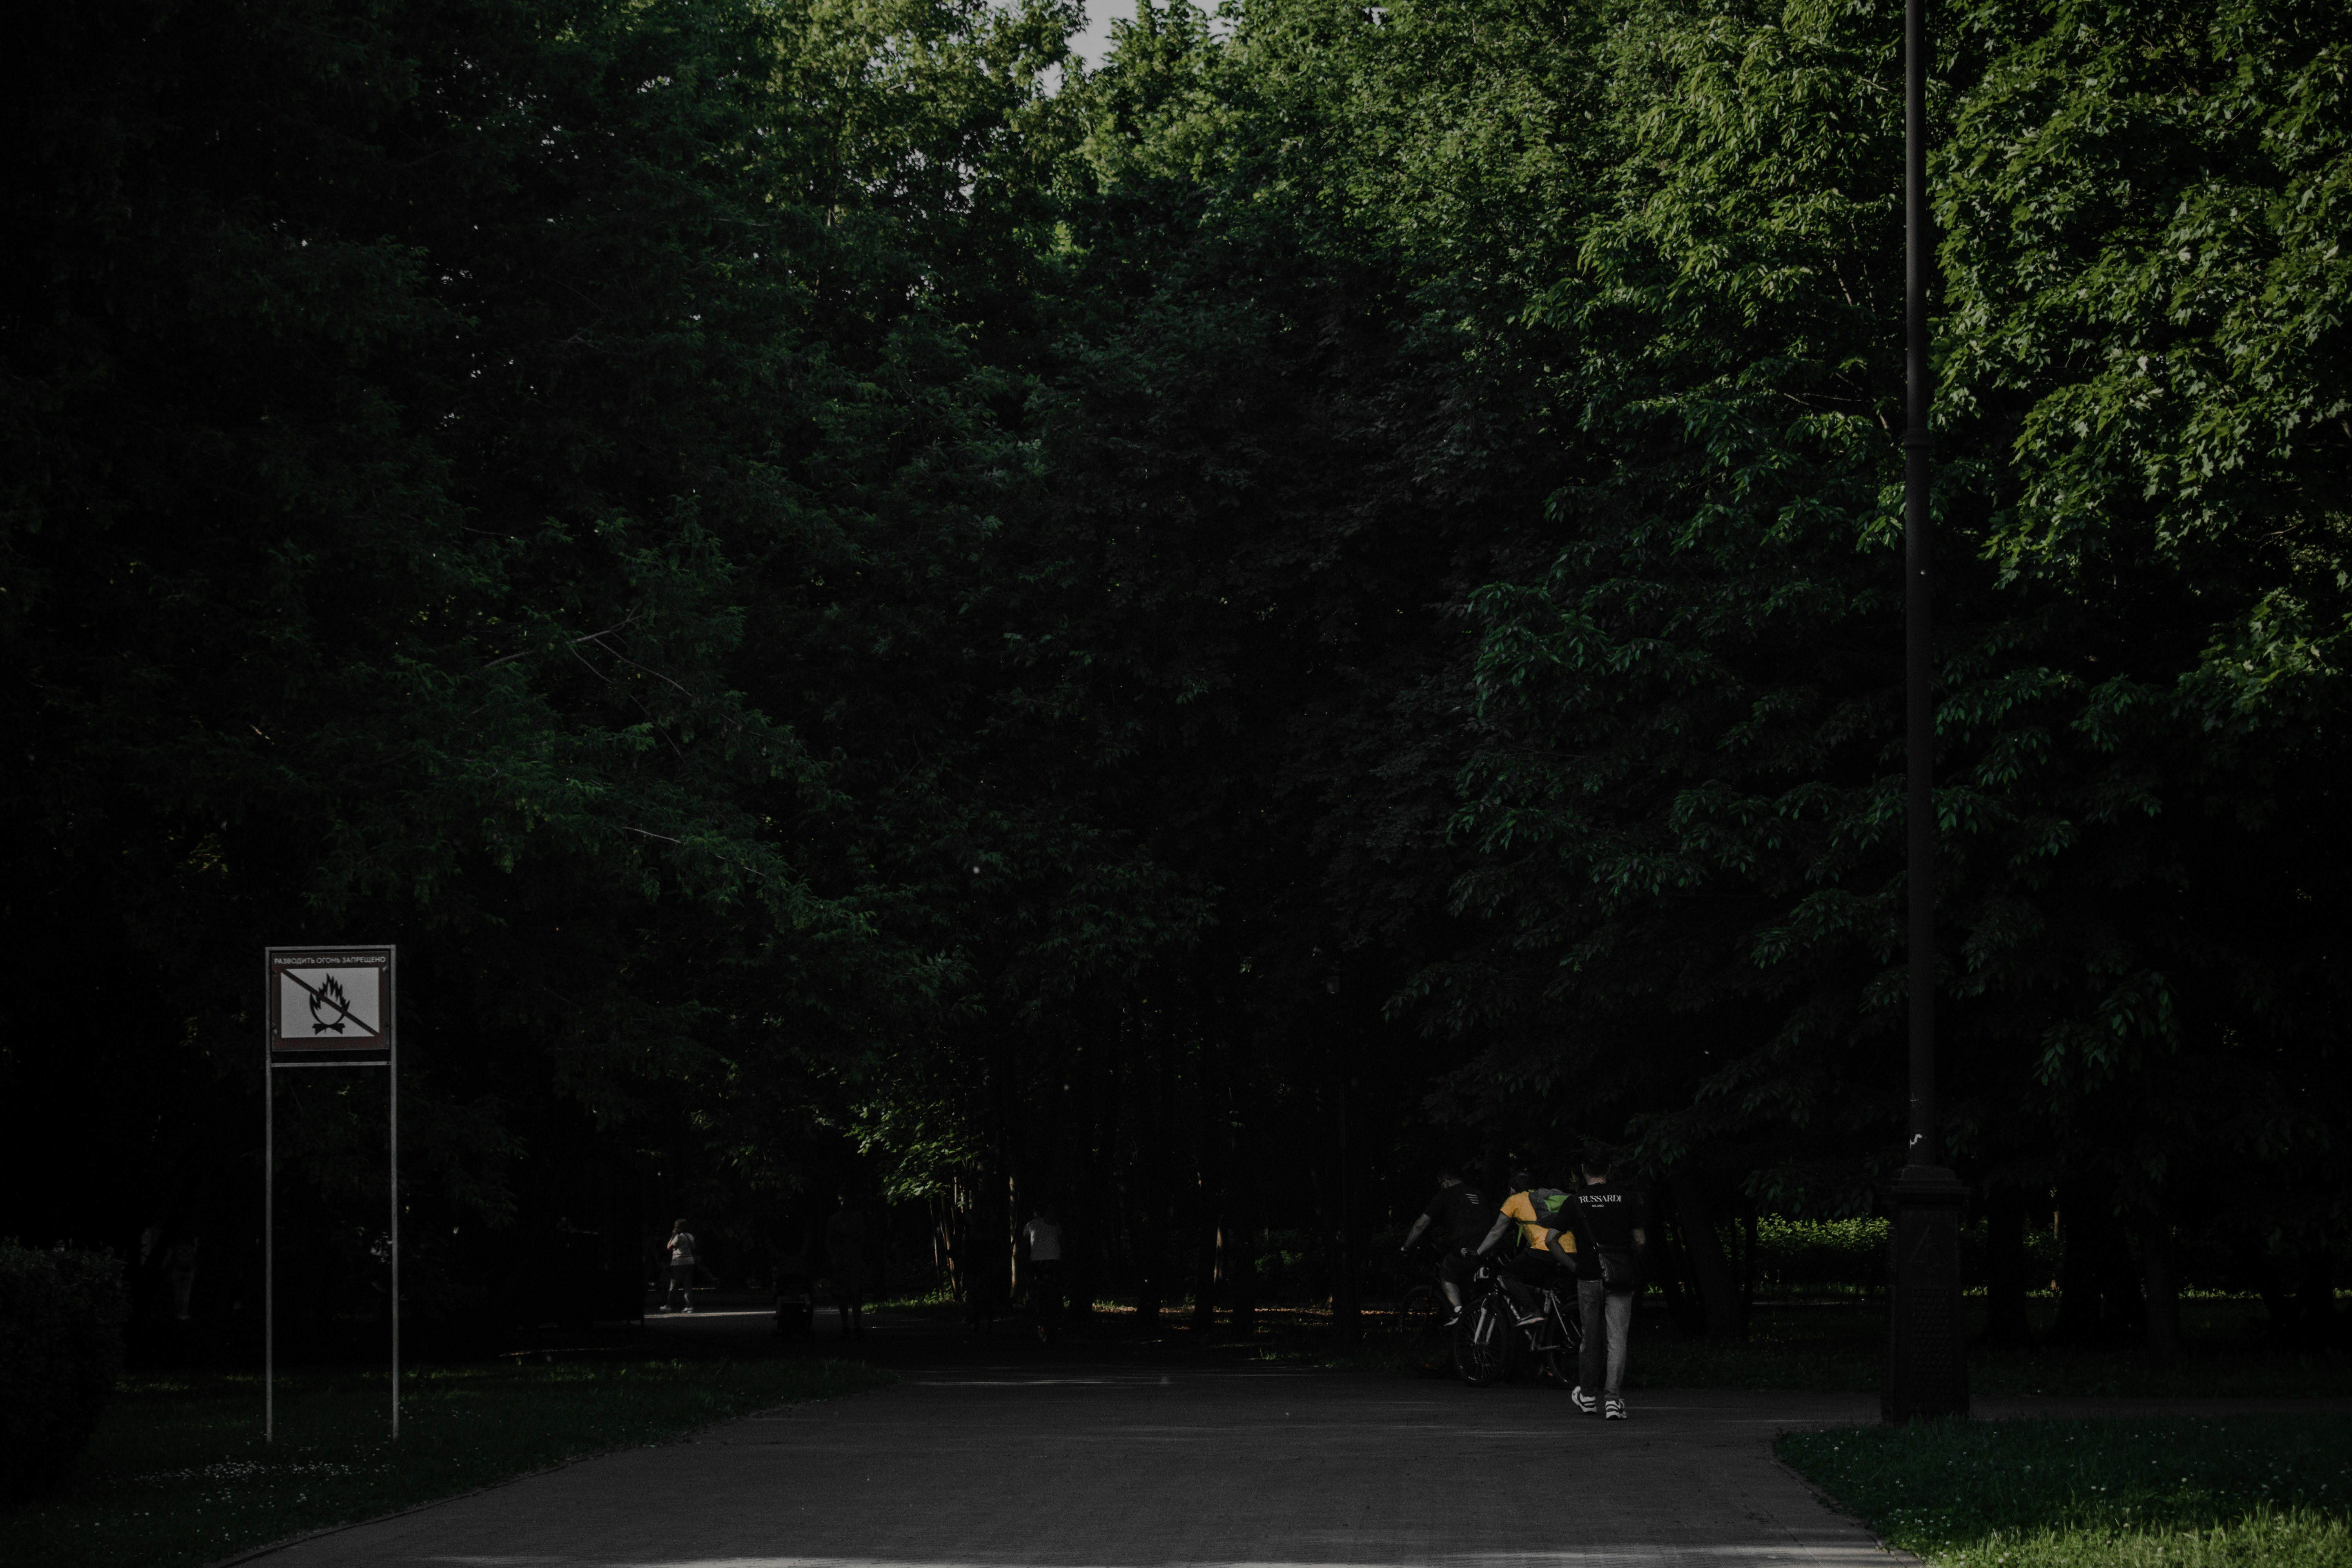 man in yellow shirt riding bicycle on road during daytime